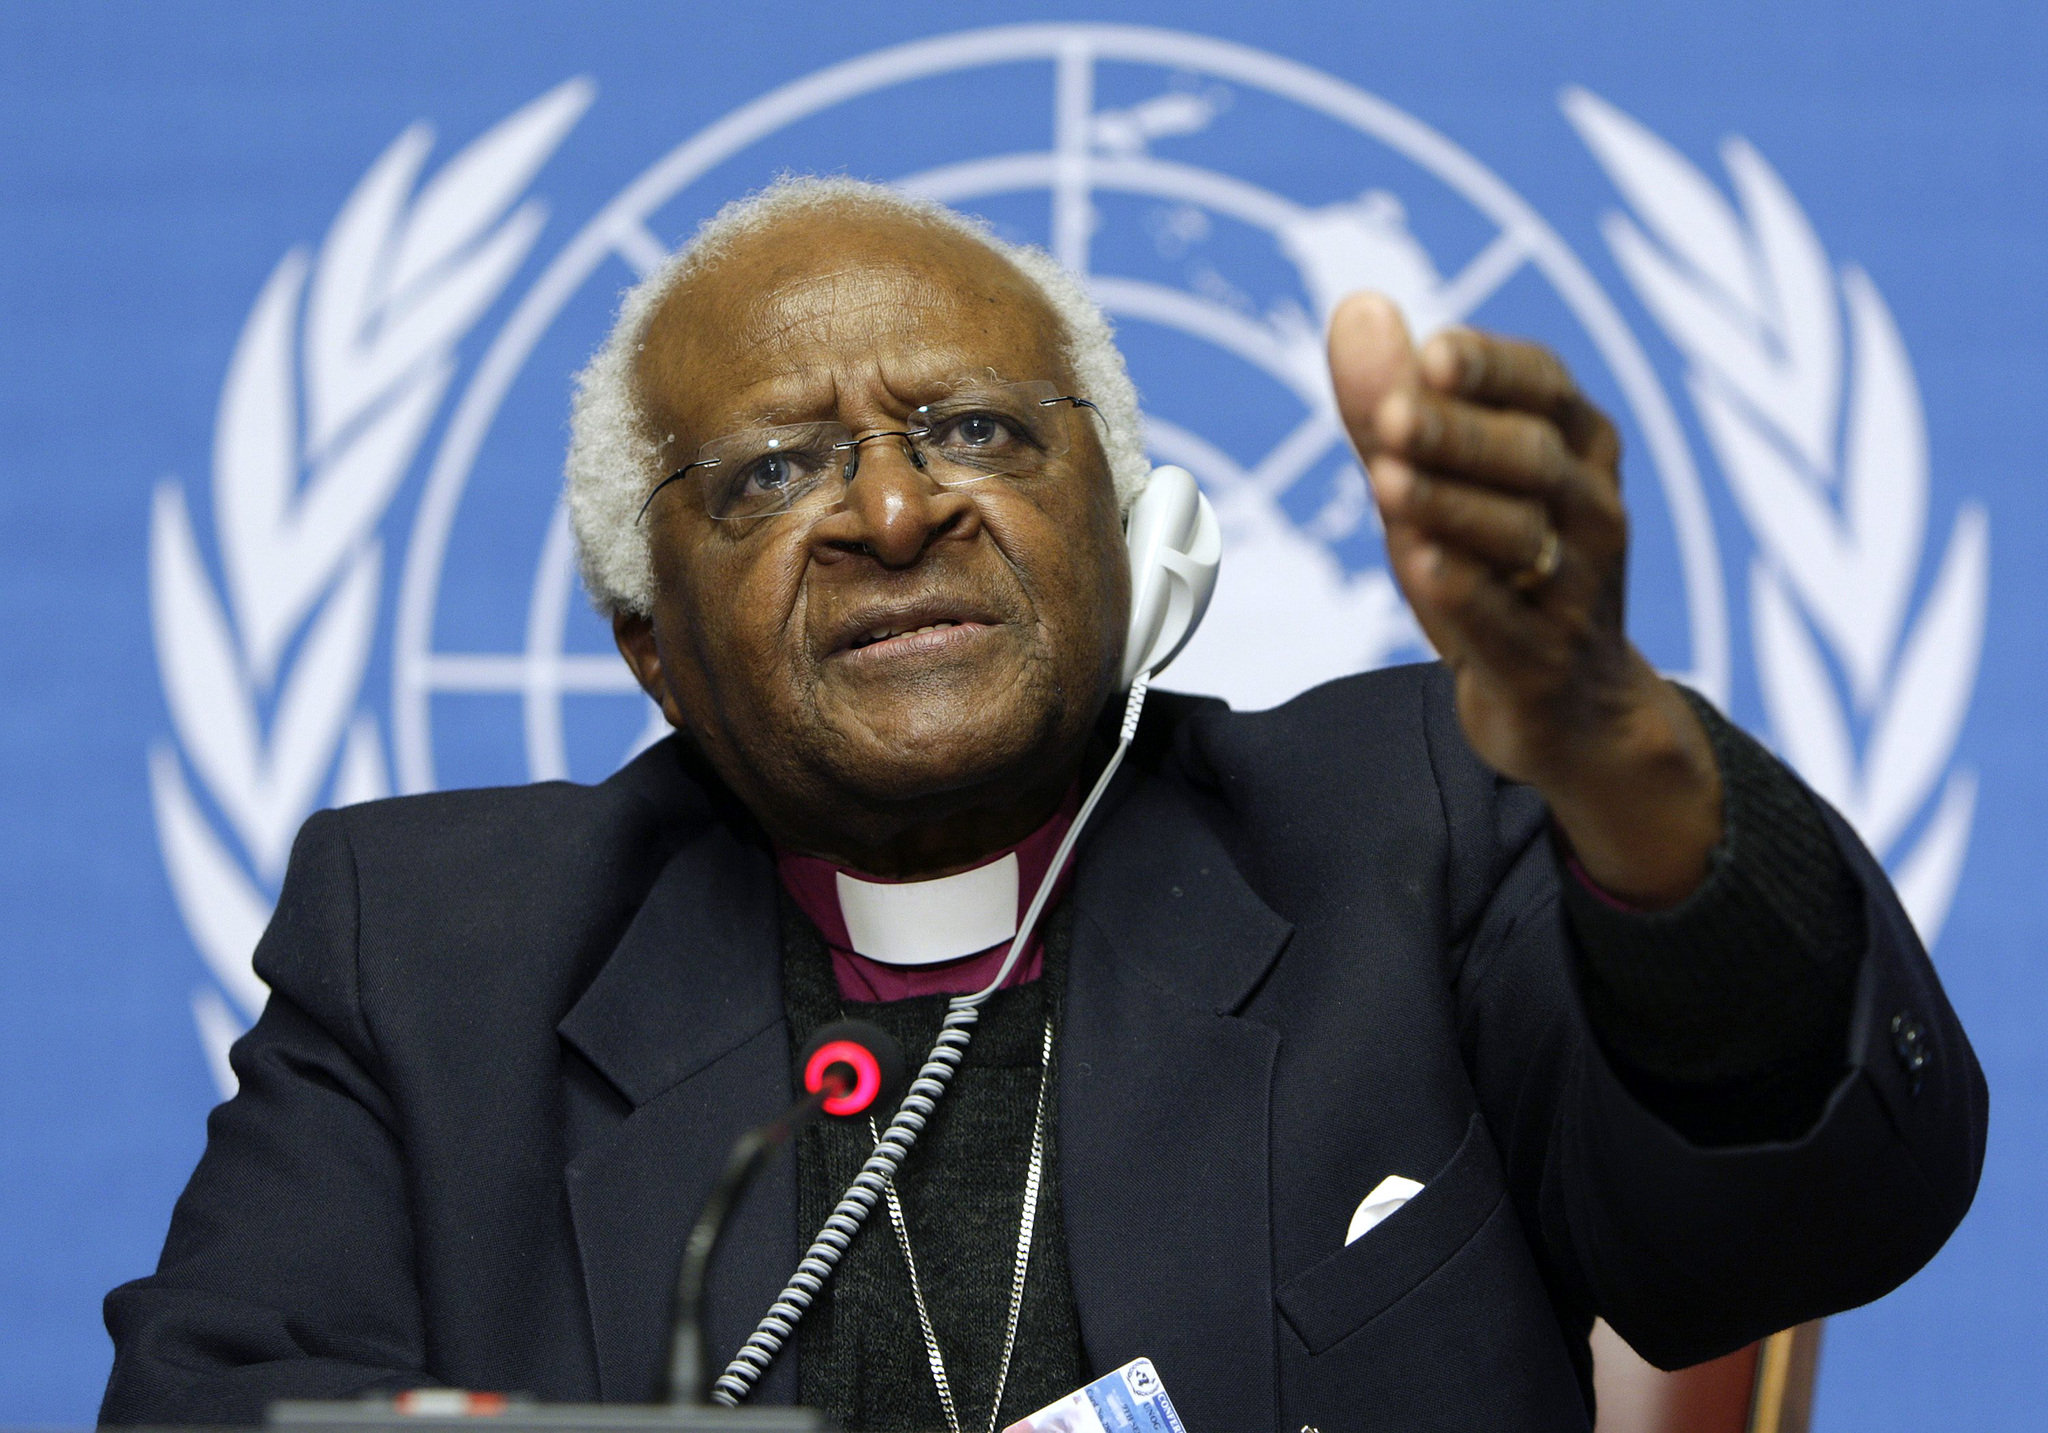 Desmond Tutu supports Action/2015.